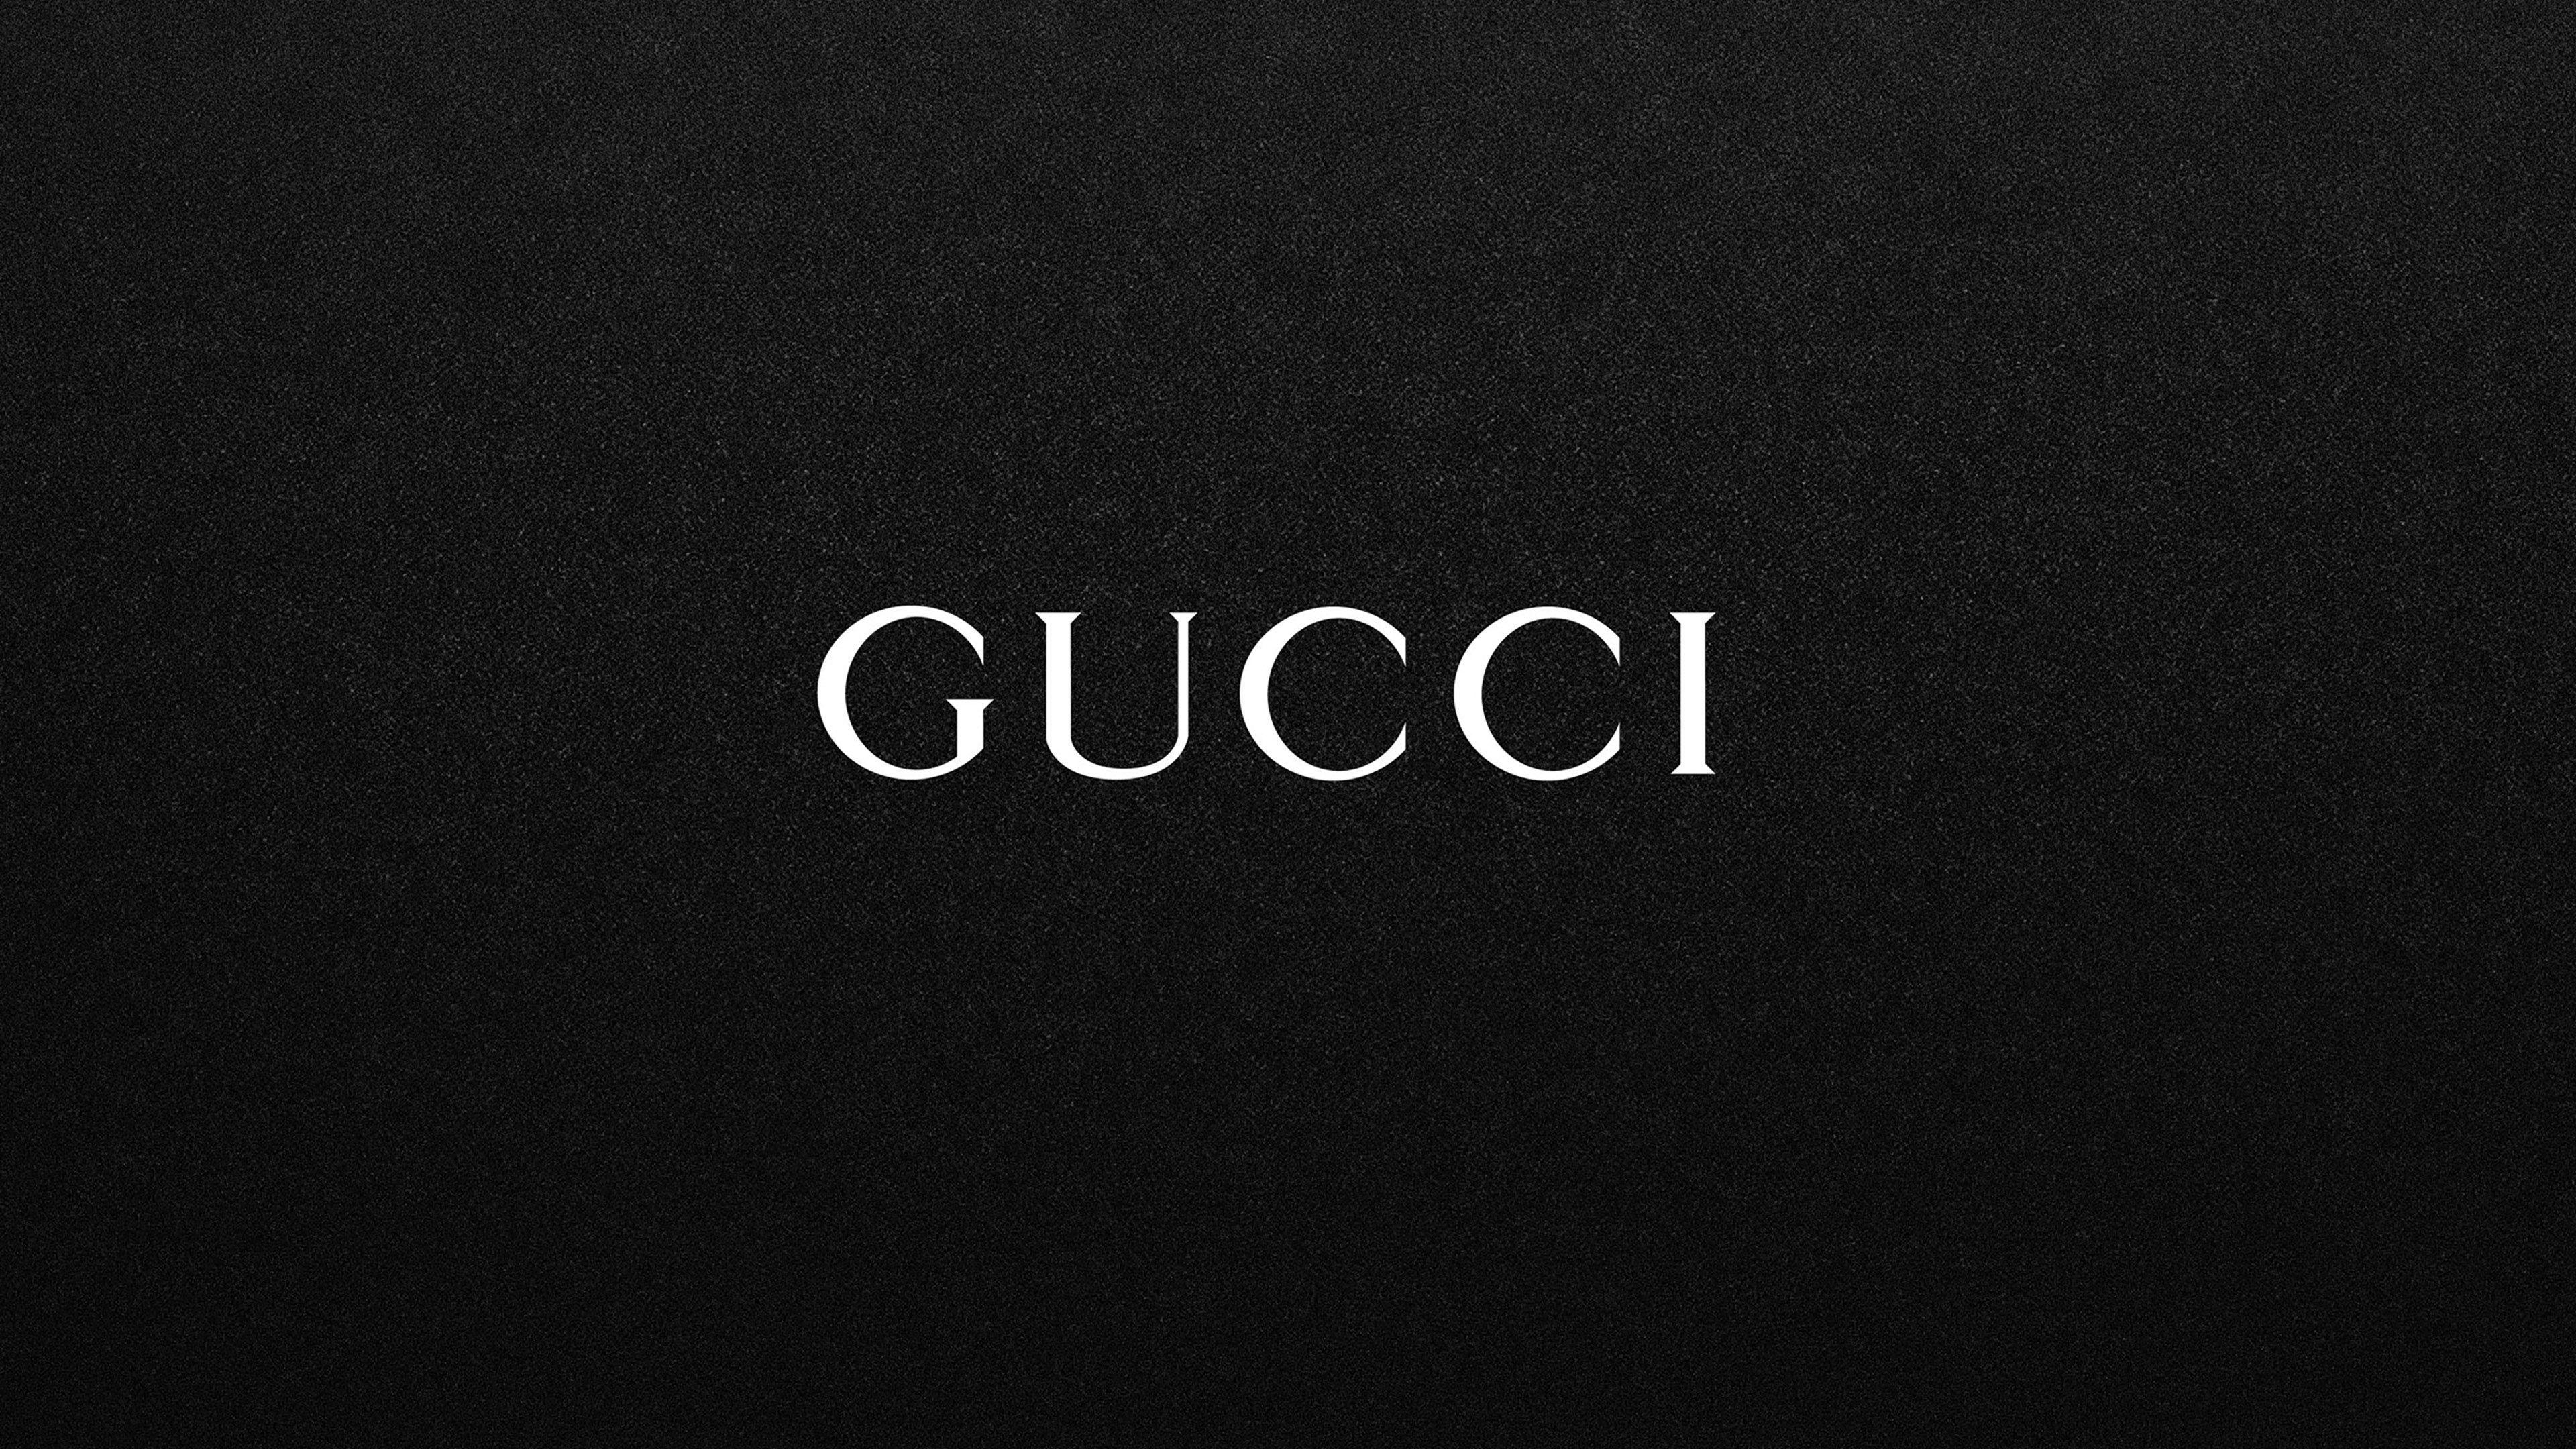 Gucci White Desktop Wallpapers Top Free Gucci White Desktop Backgrounds Wallpaperaccess